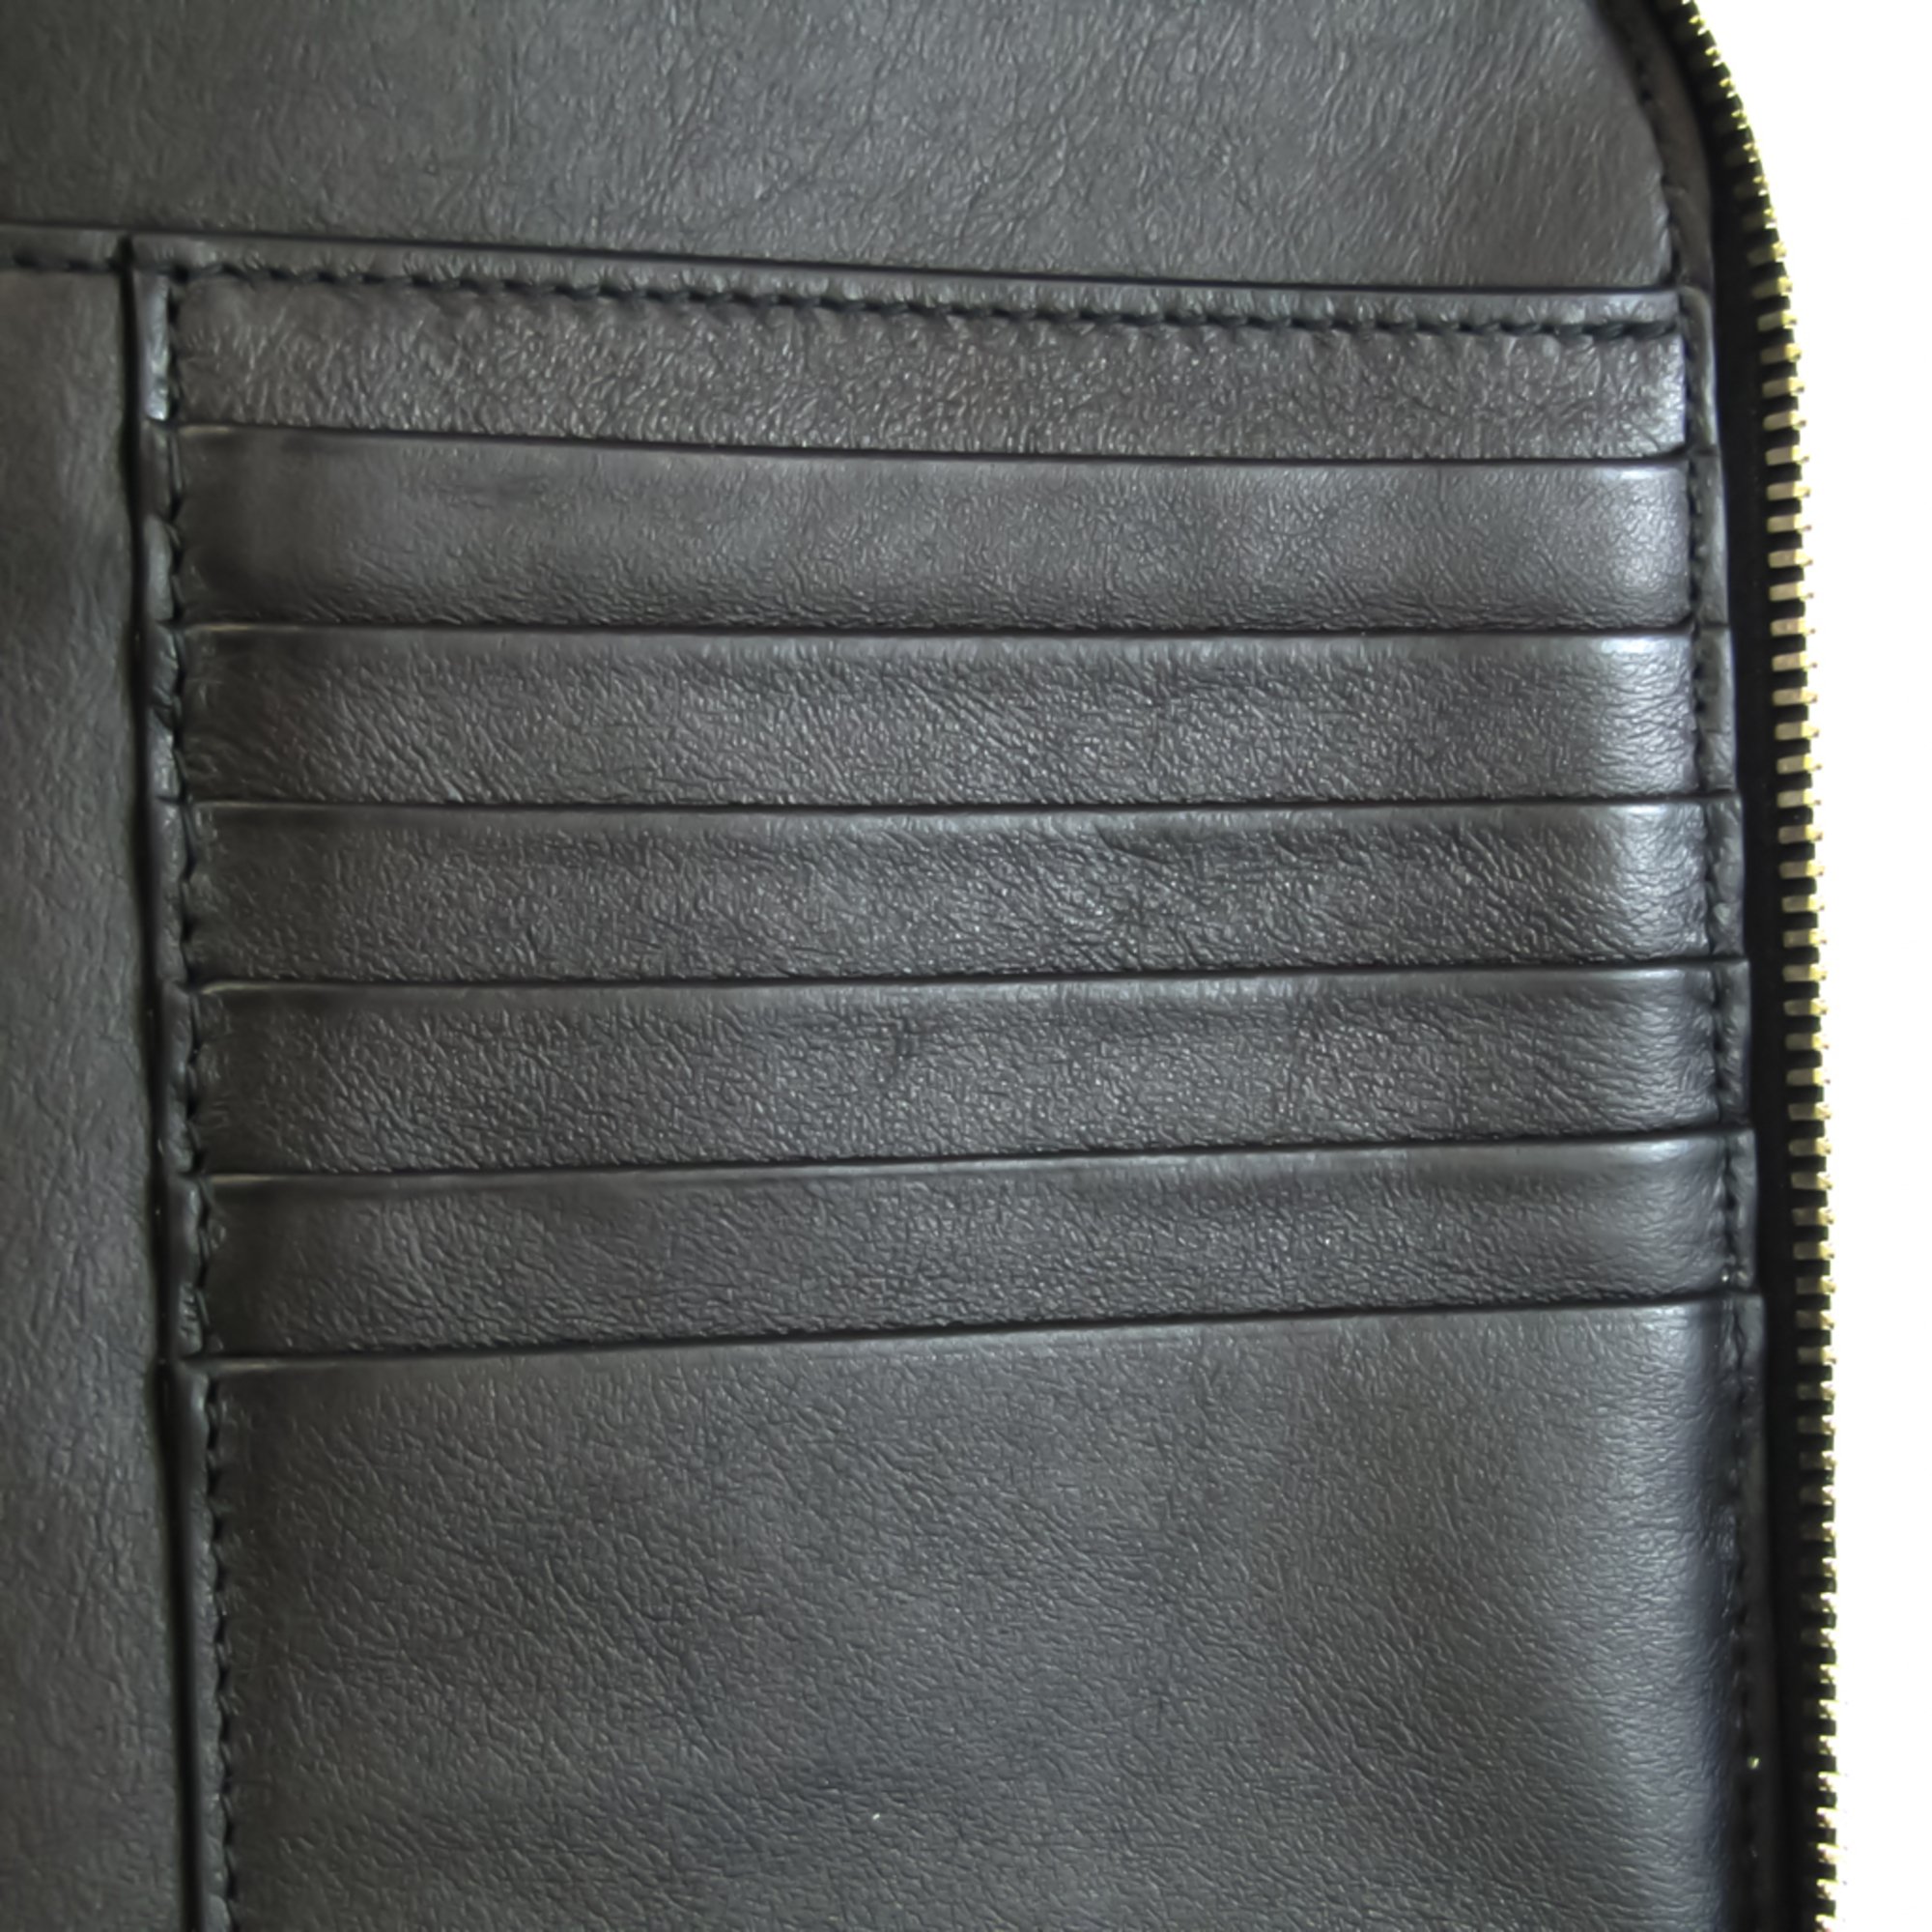 Bottega Veneta Marco Polo Document 580472 VMAW1 Men's Leather Clutch Bag Black